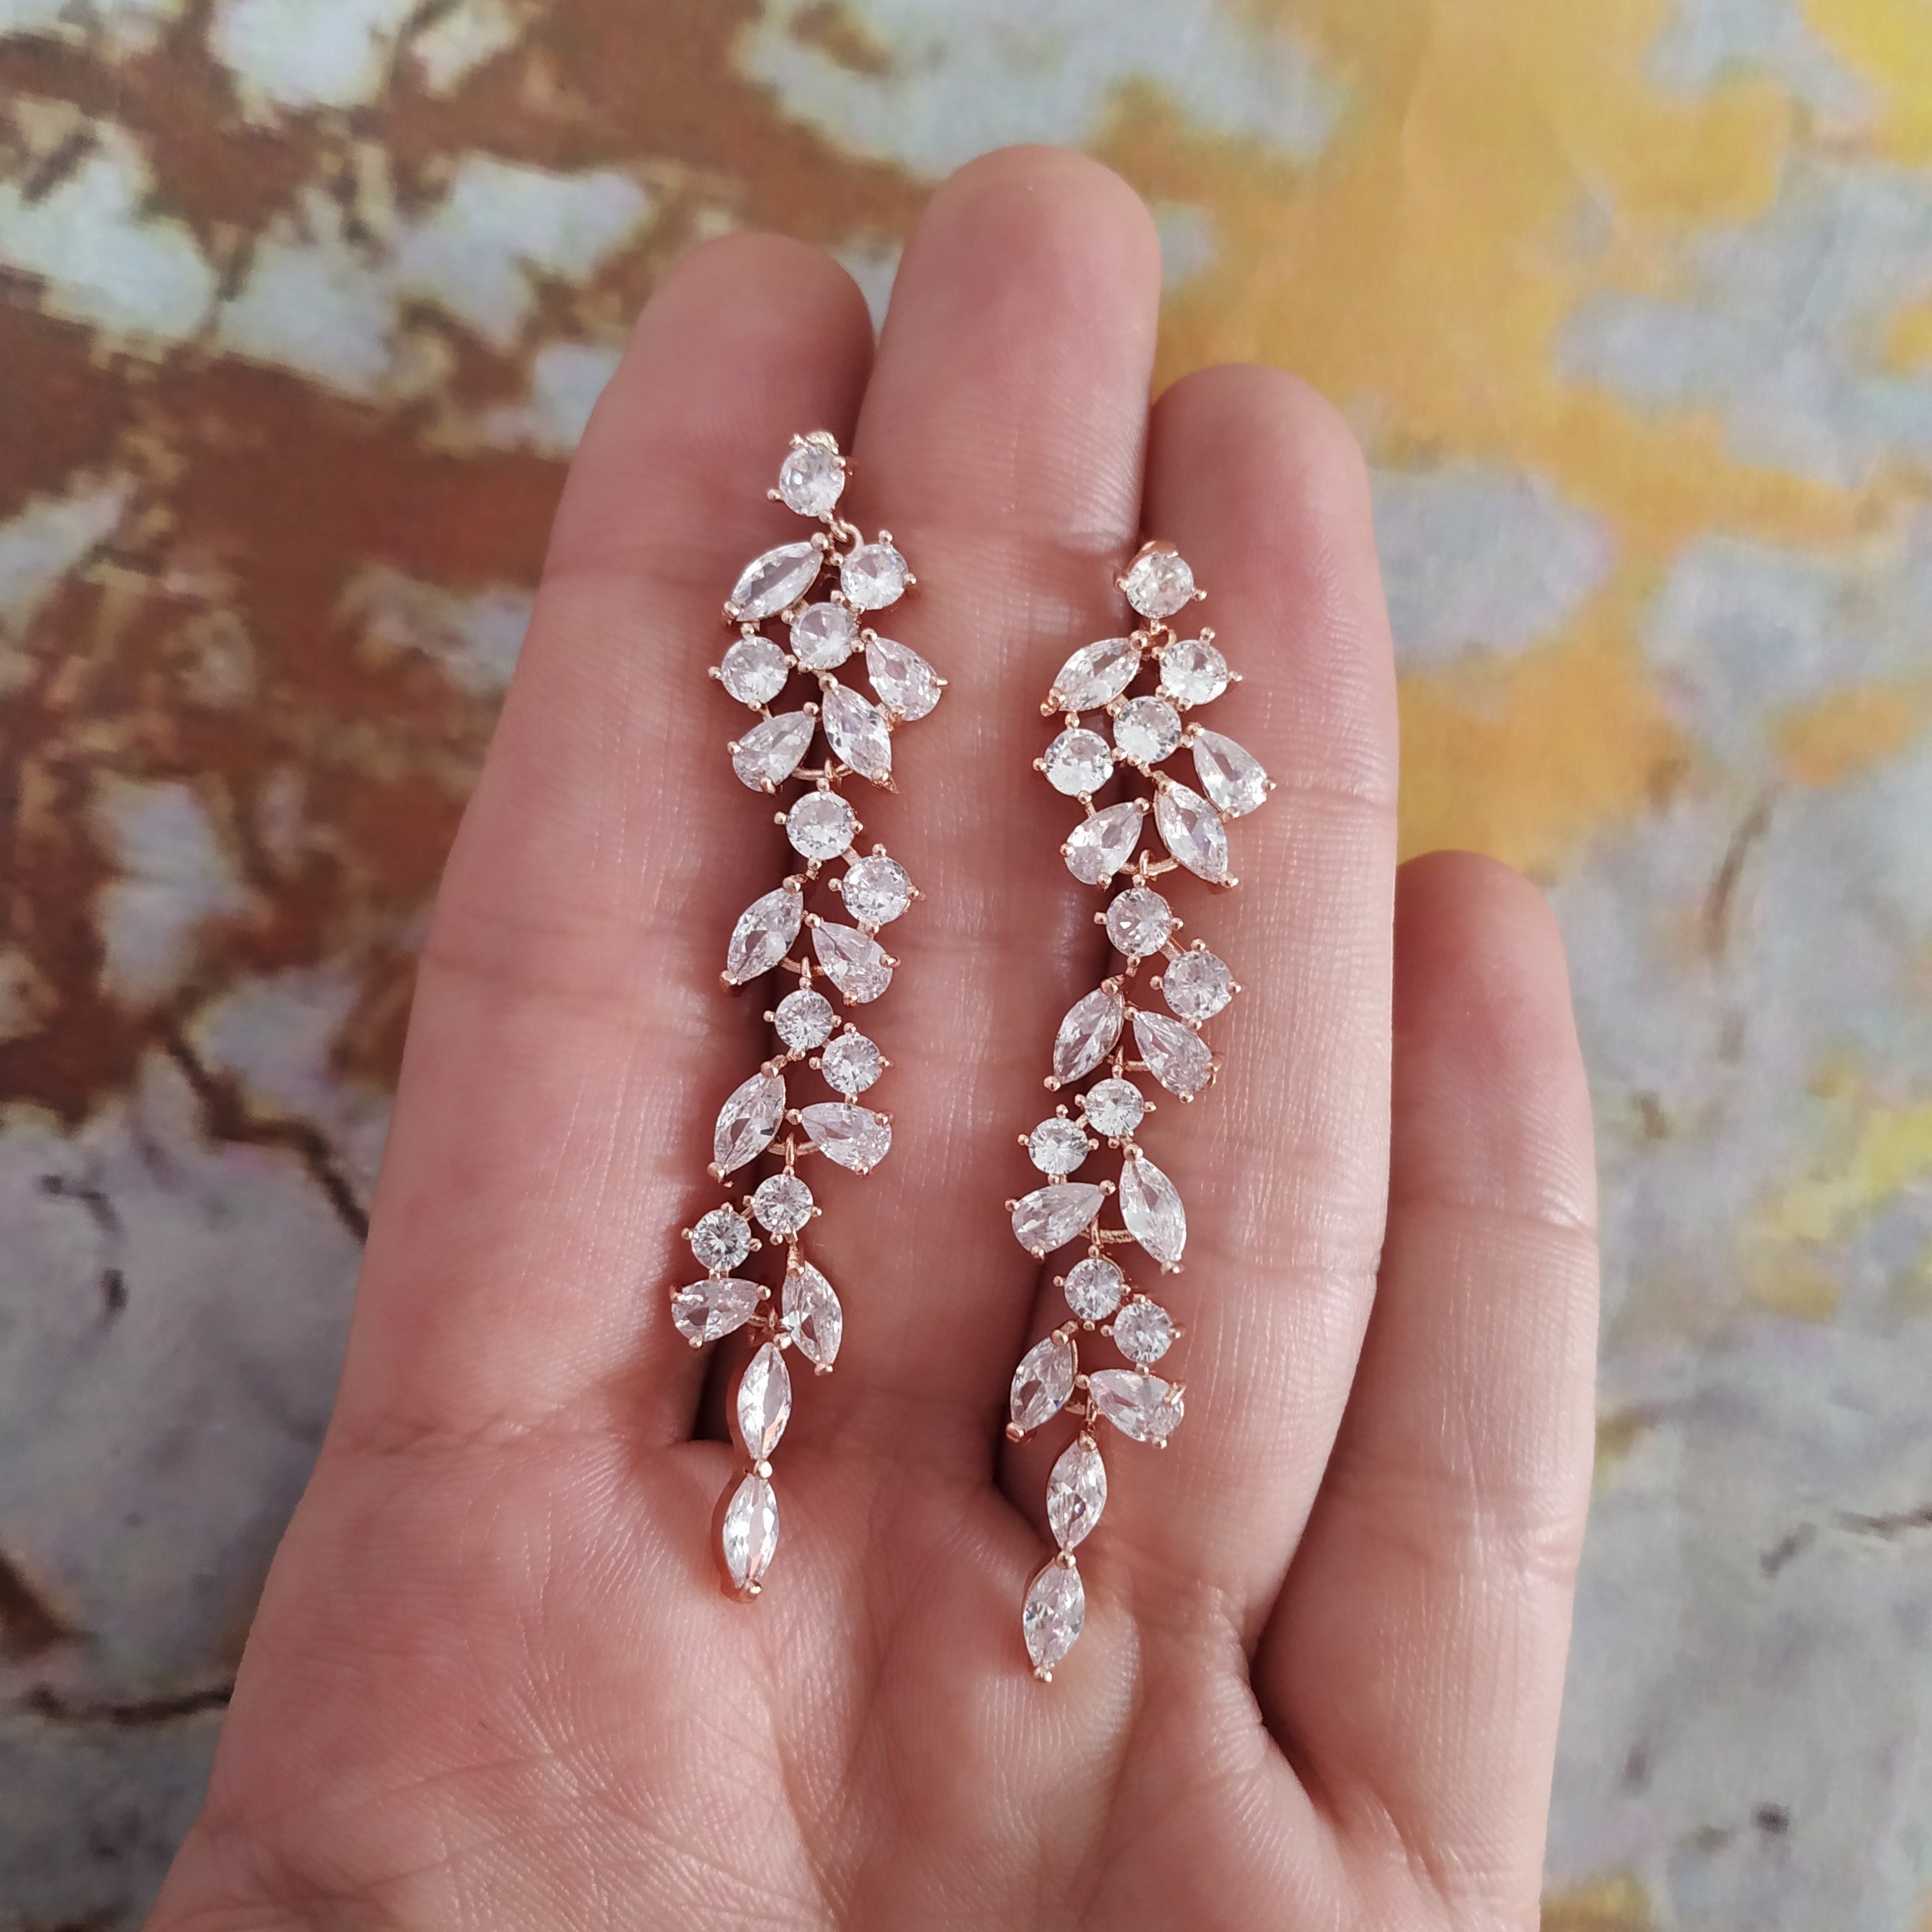 Discover more than 282 buy swarovski earrings latest